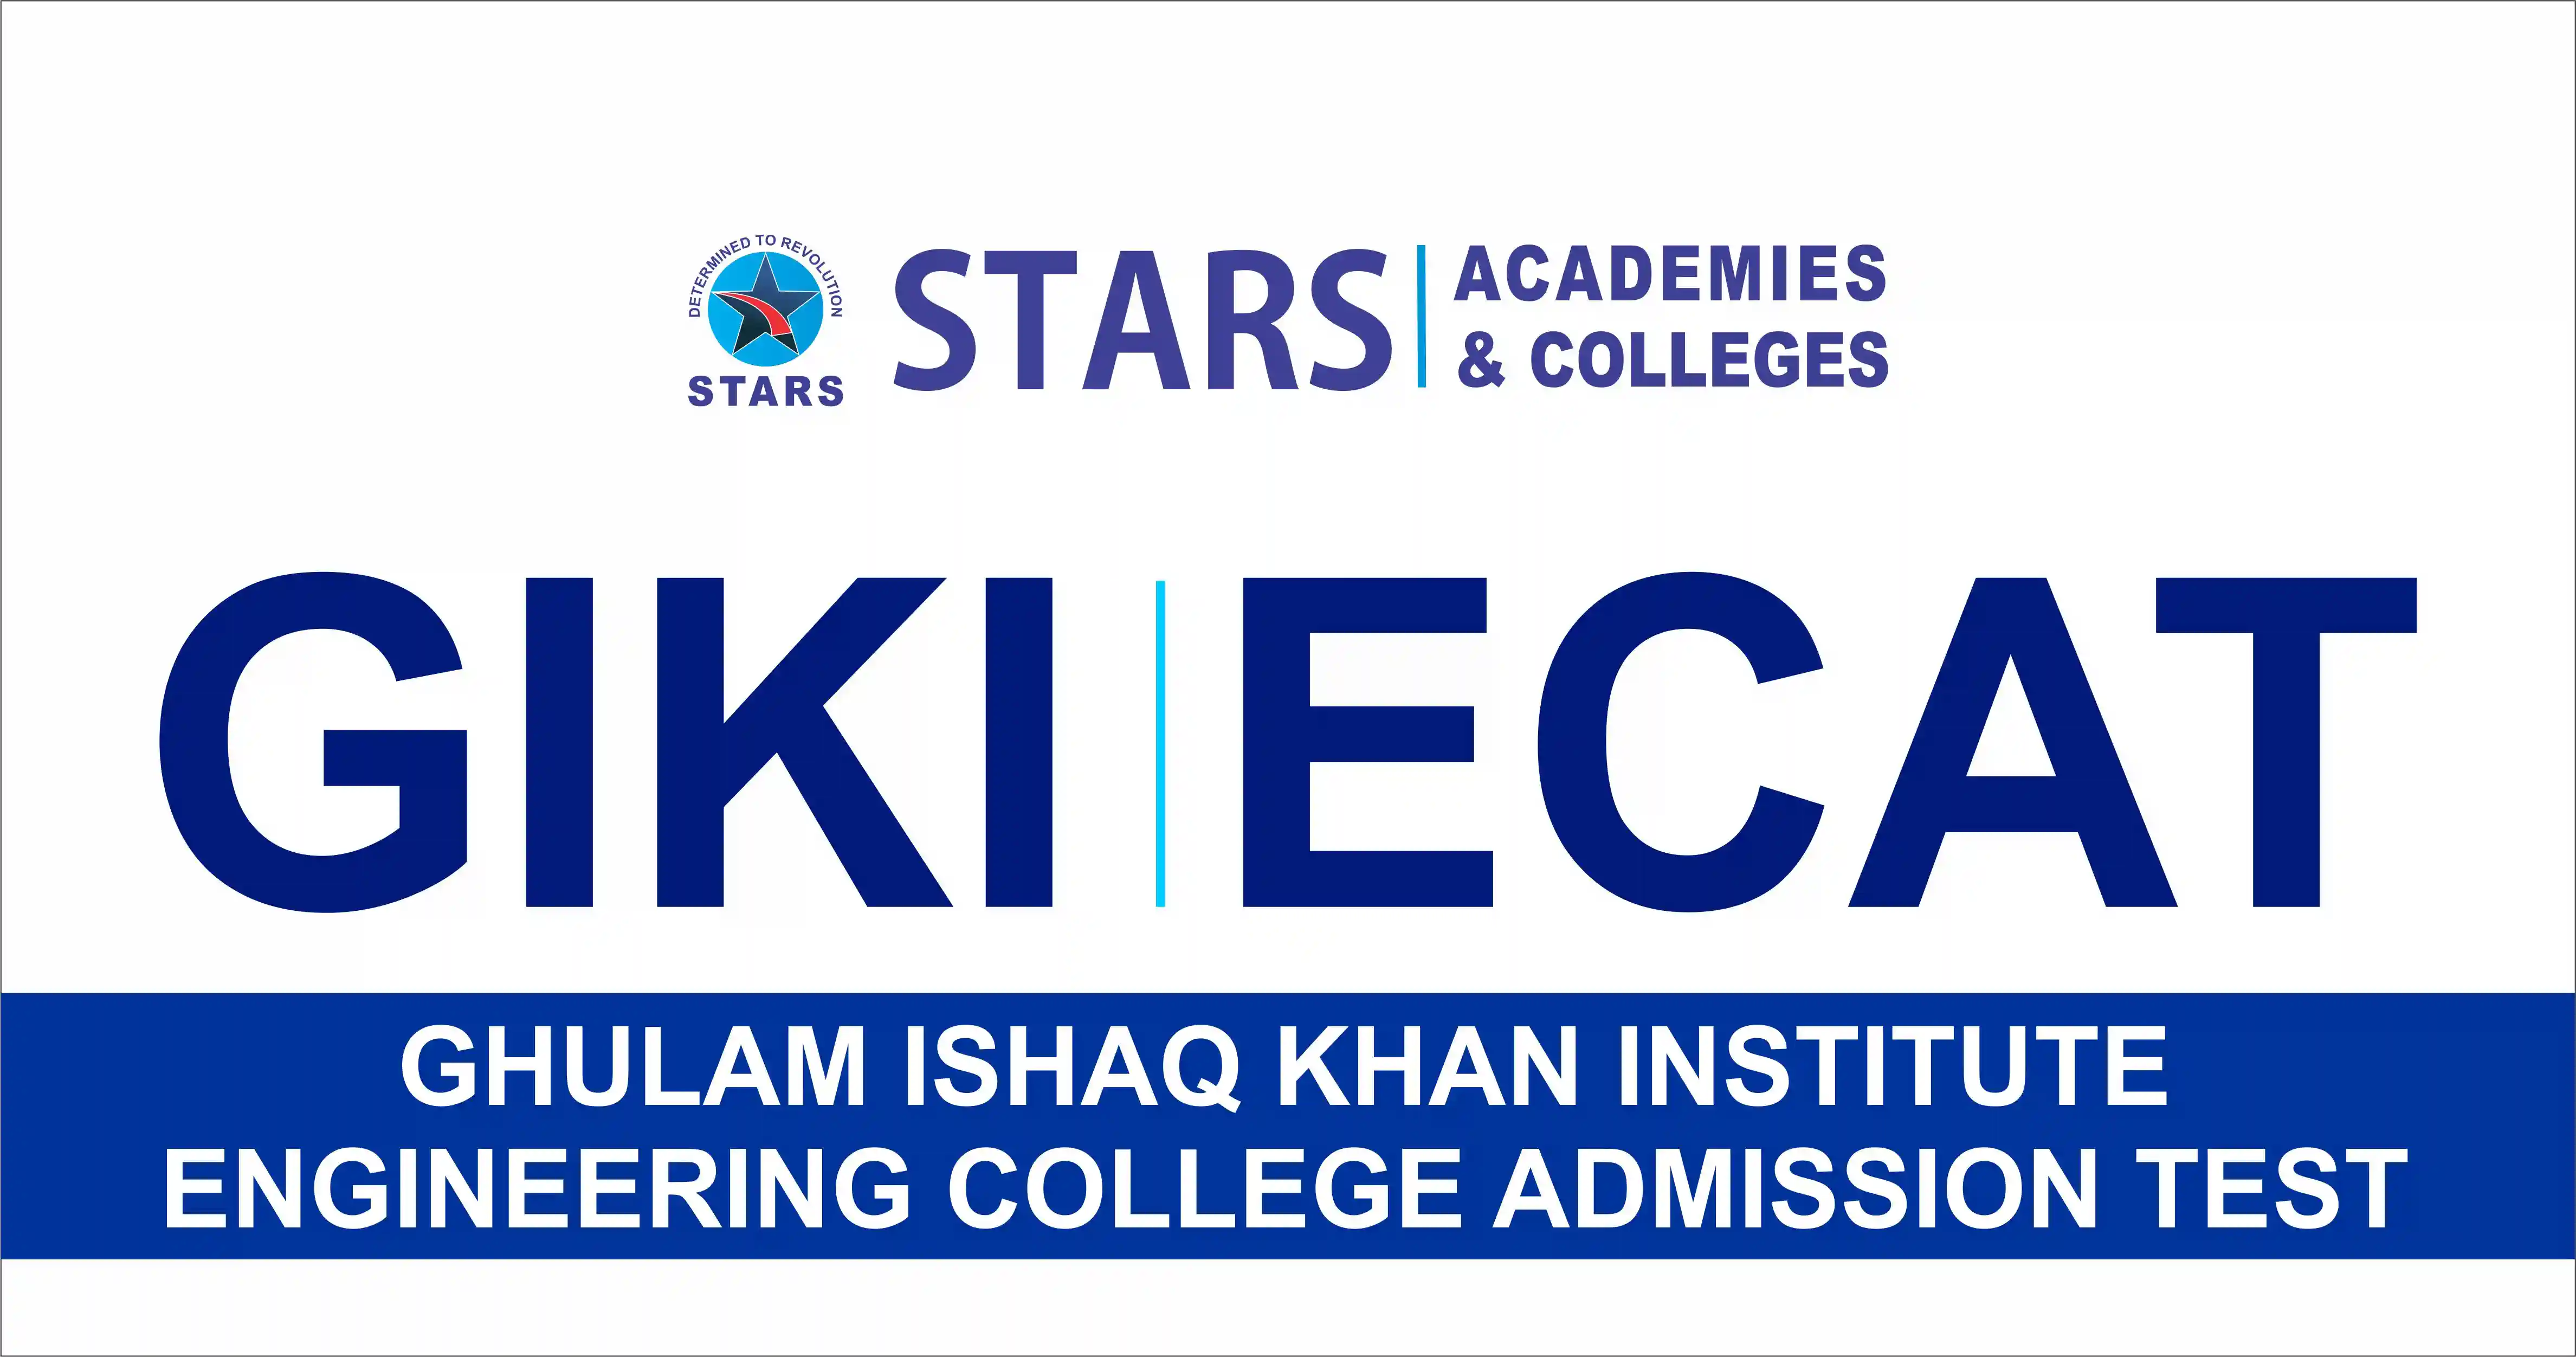 Stars Academy GIKI Information